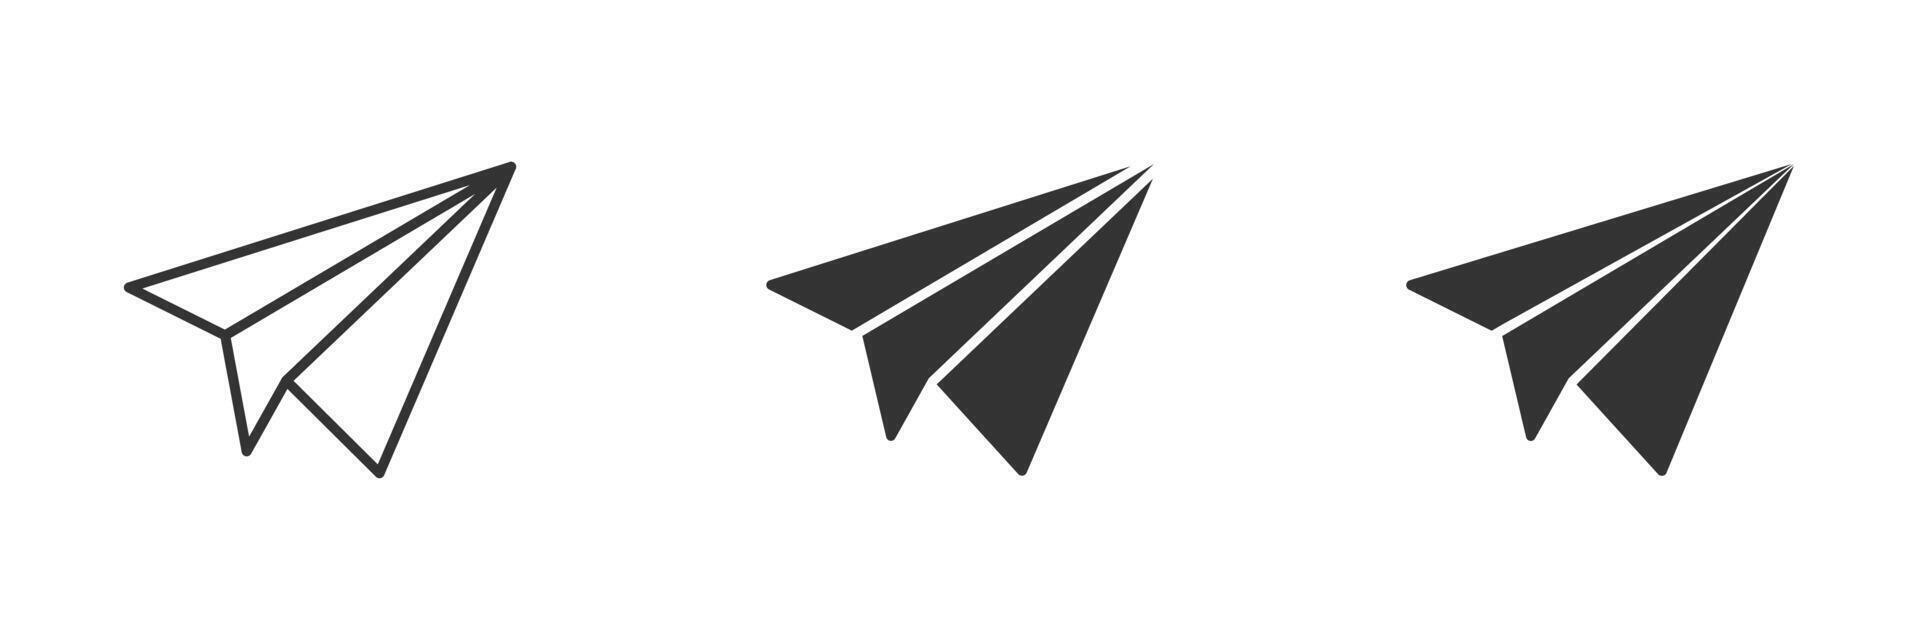 Paper plane icon. Vector illustration.